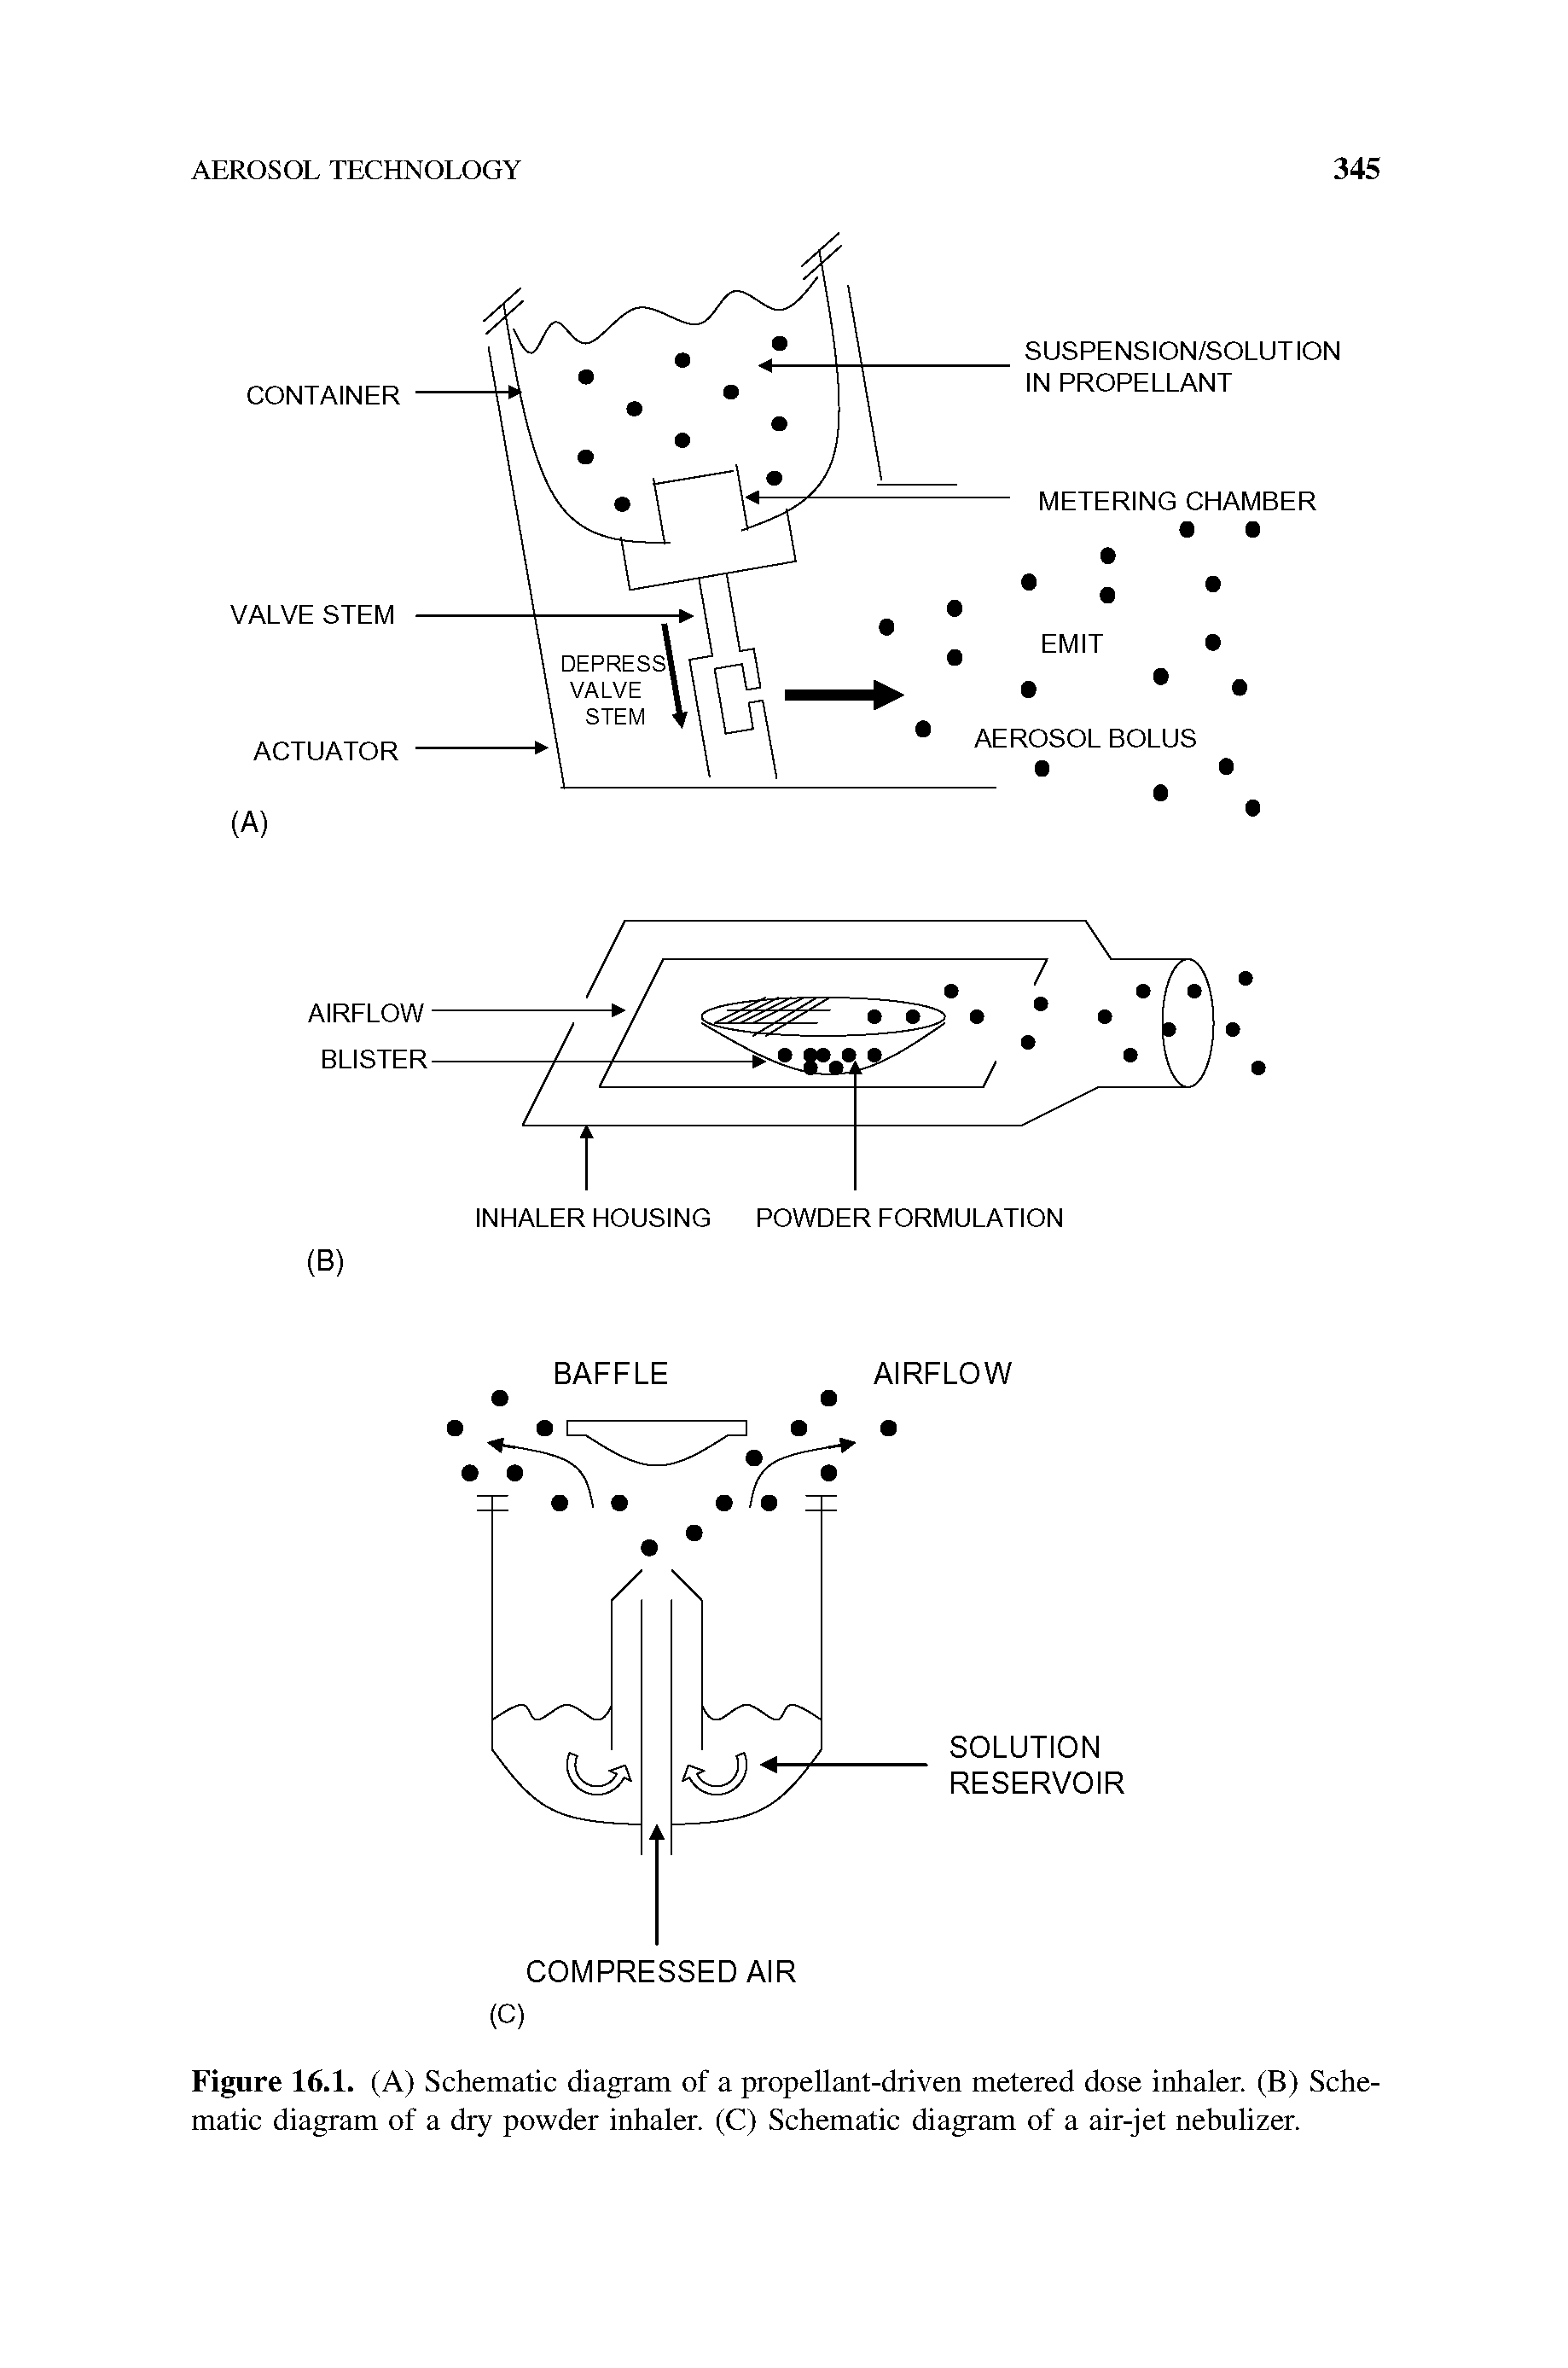 Figure 16.1. (A) Schematic diagram of a propellant-driven metered dose inhaler. (B) Schematic diagram of a dry powder inhaler. (C) Schematic diagram of a air-jet nebulizer.